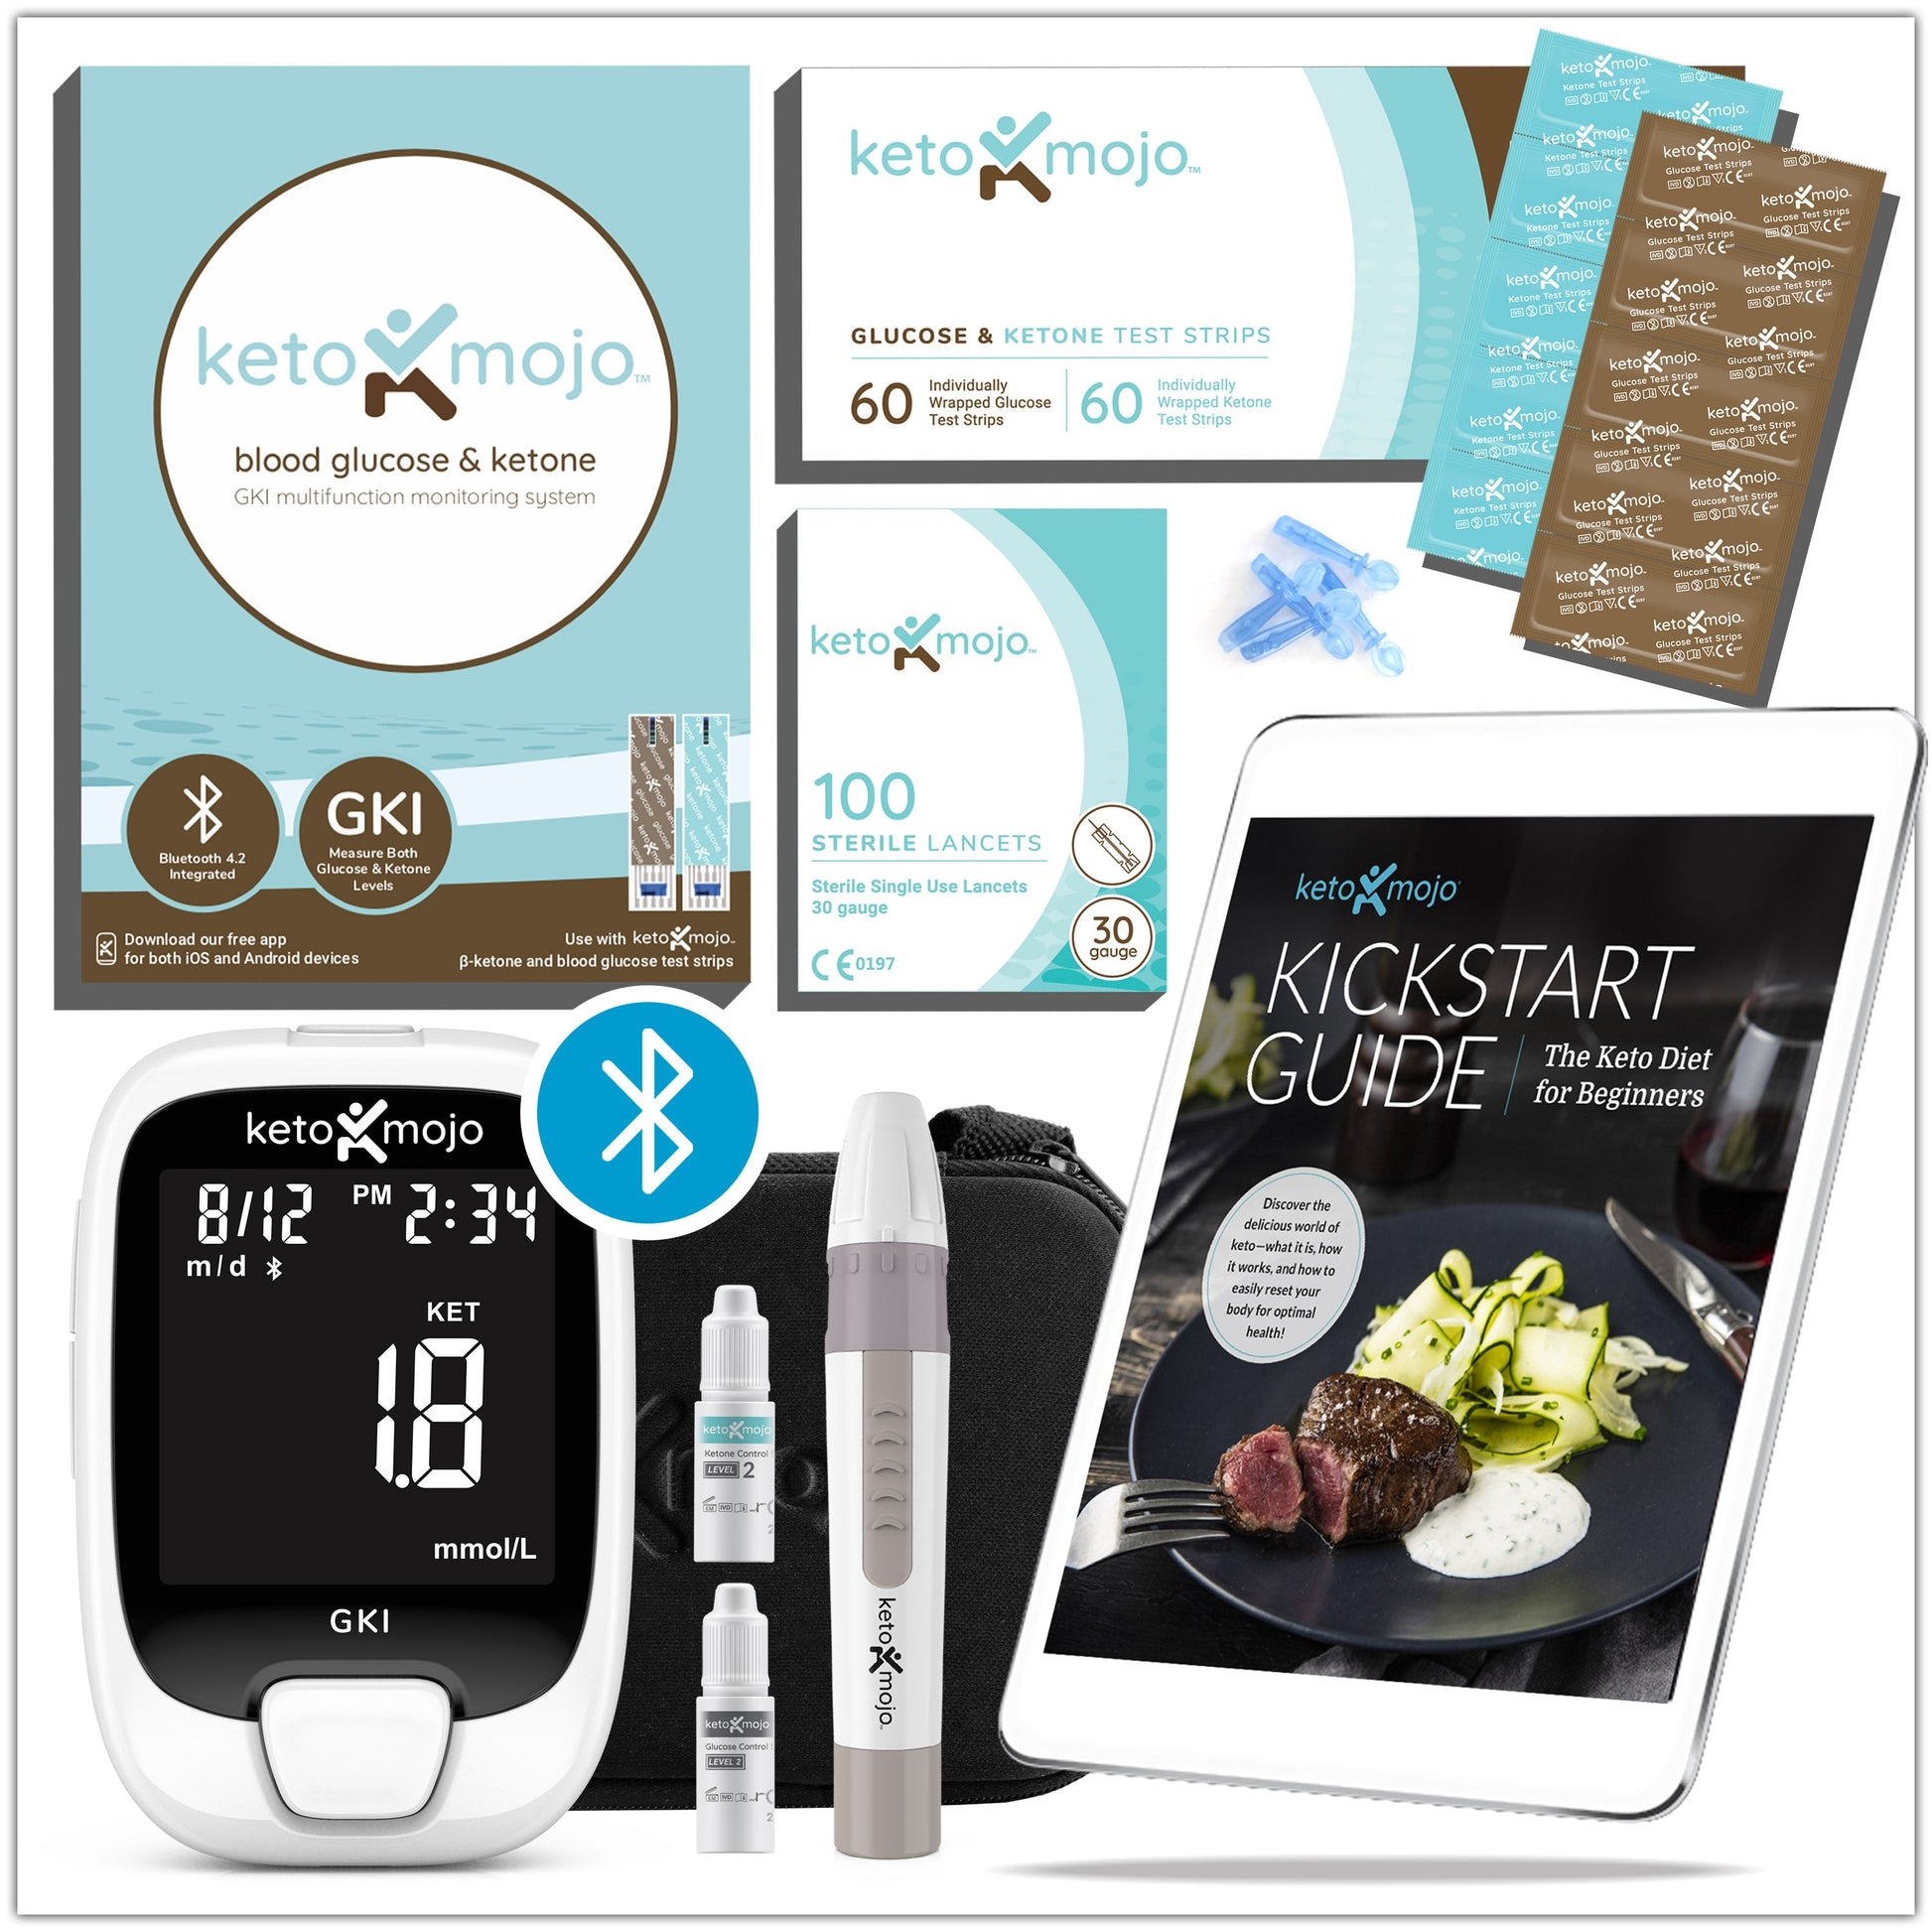 Keto Mojo GK+ Blood Glucose & Ketone Meter Starter Kit – deltaG Ketones